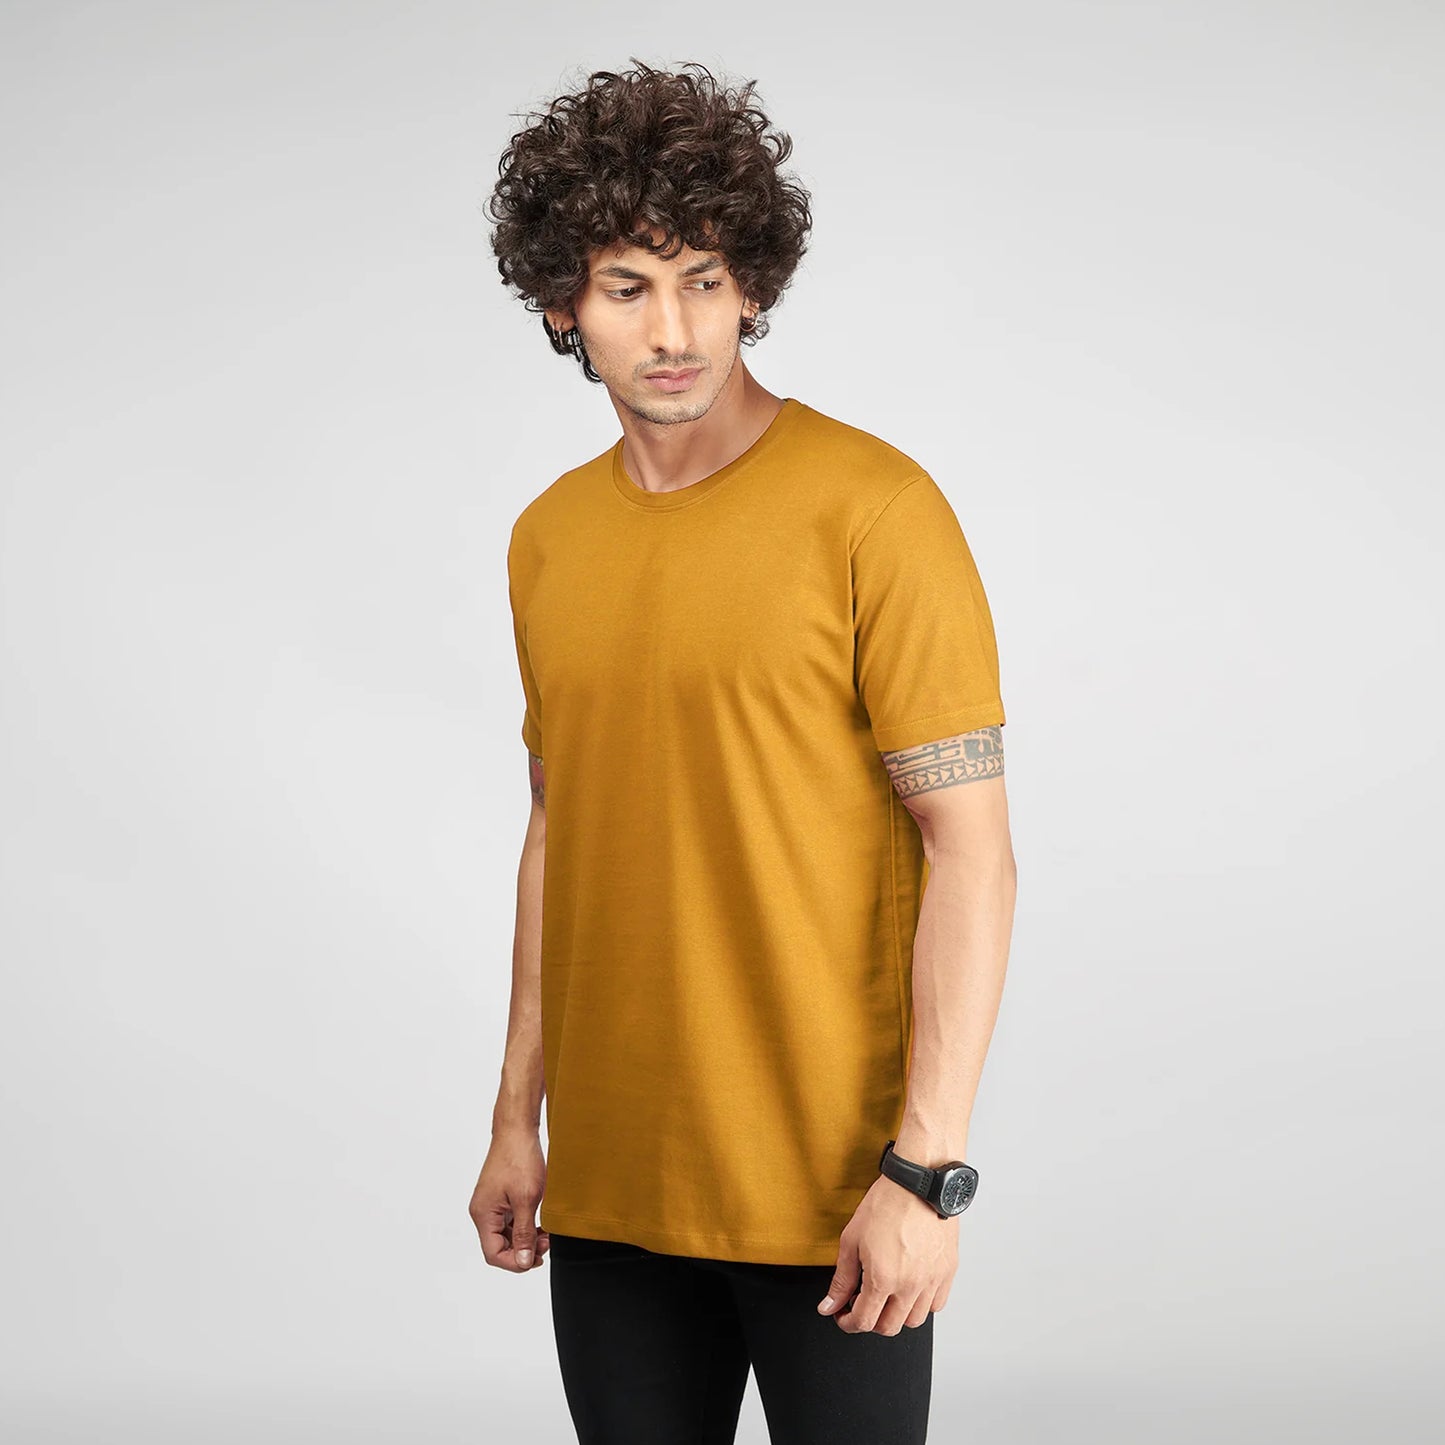 Basic Mustard Half Sleeves T-Shirt